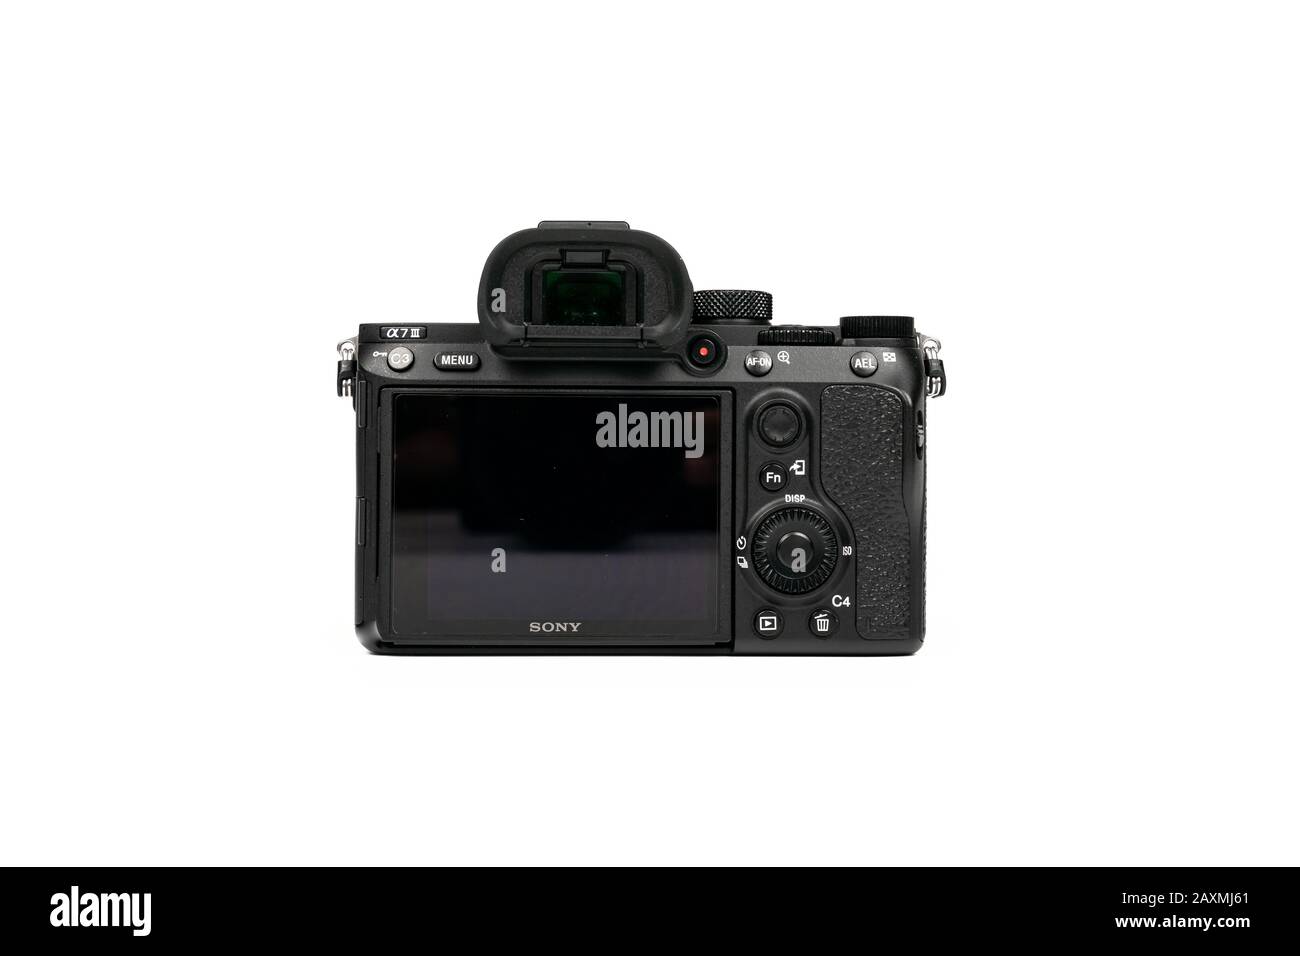 Sony A7ii Stockfotos und -bilder Kaufen - Alamy